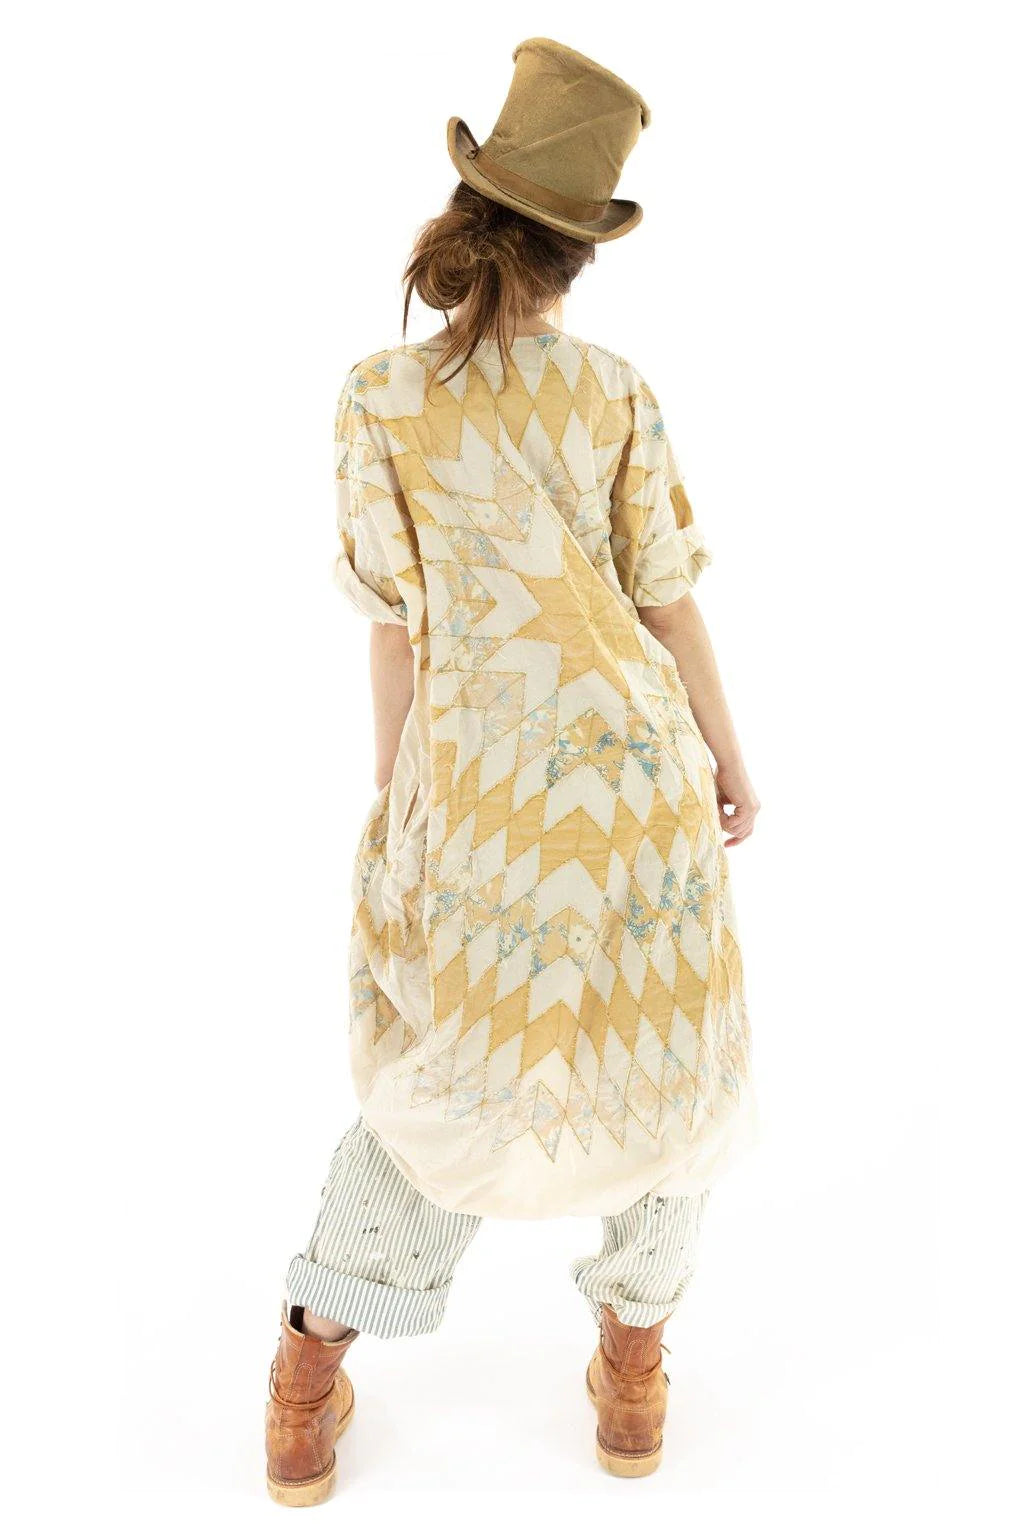 Magnolia Pearl Quiltwork Artist Smock Dress - Marisol